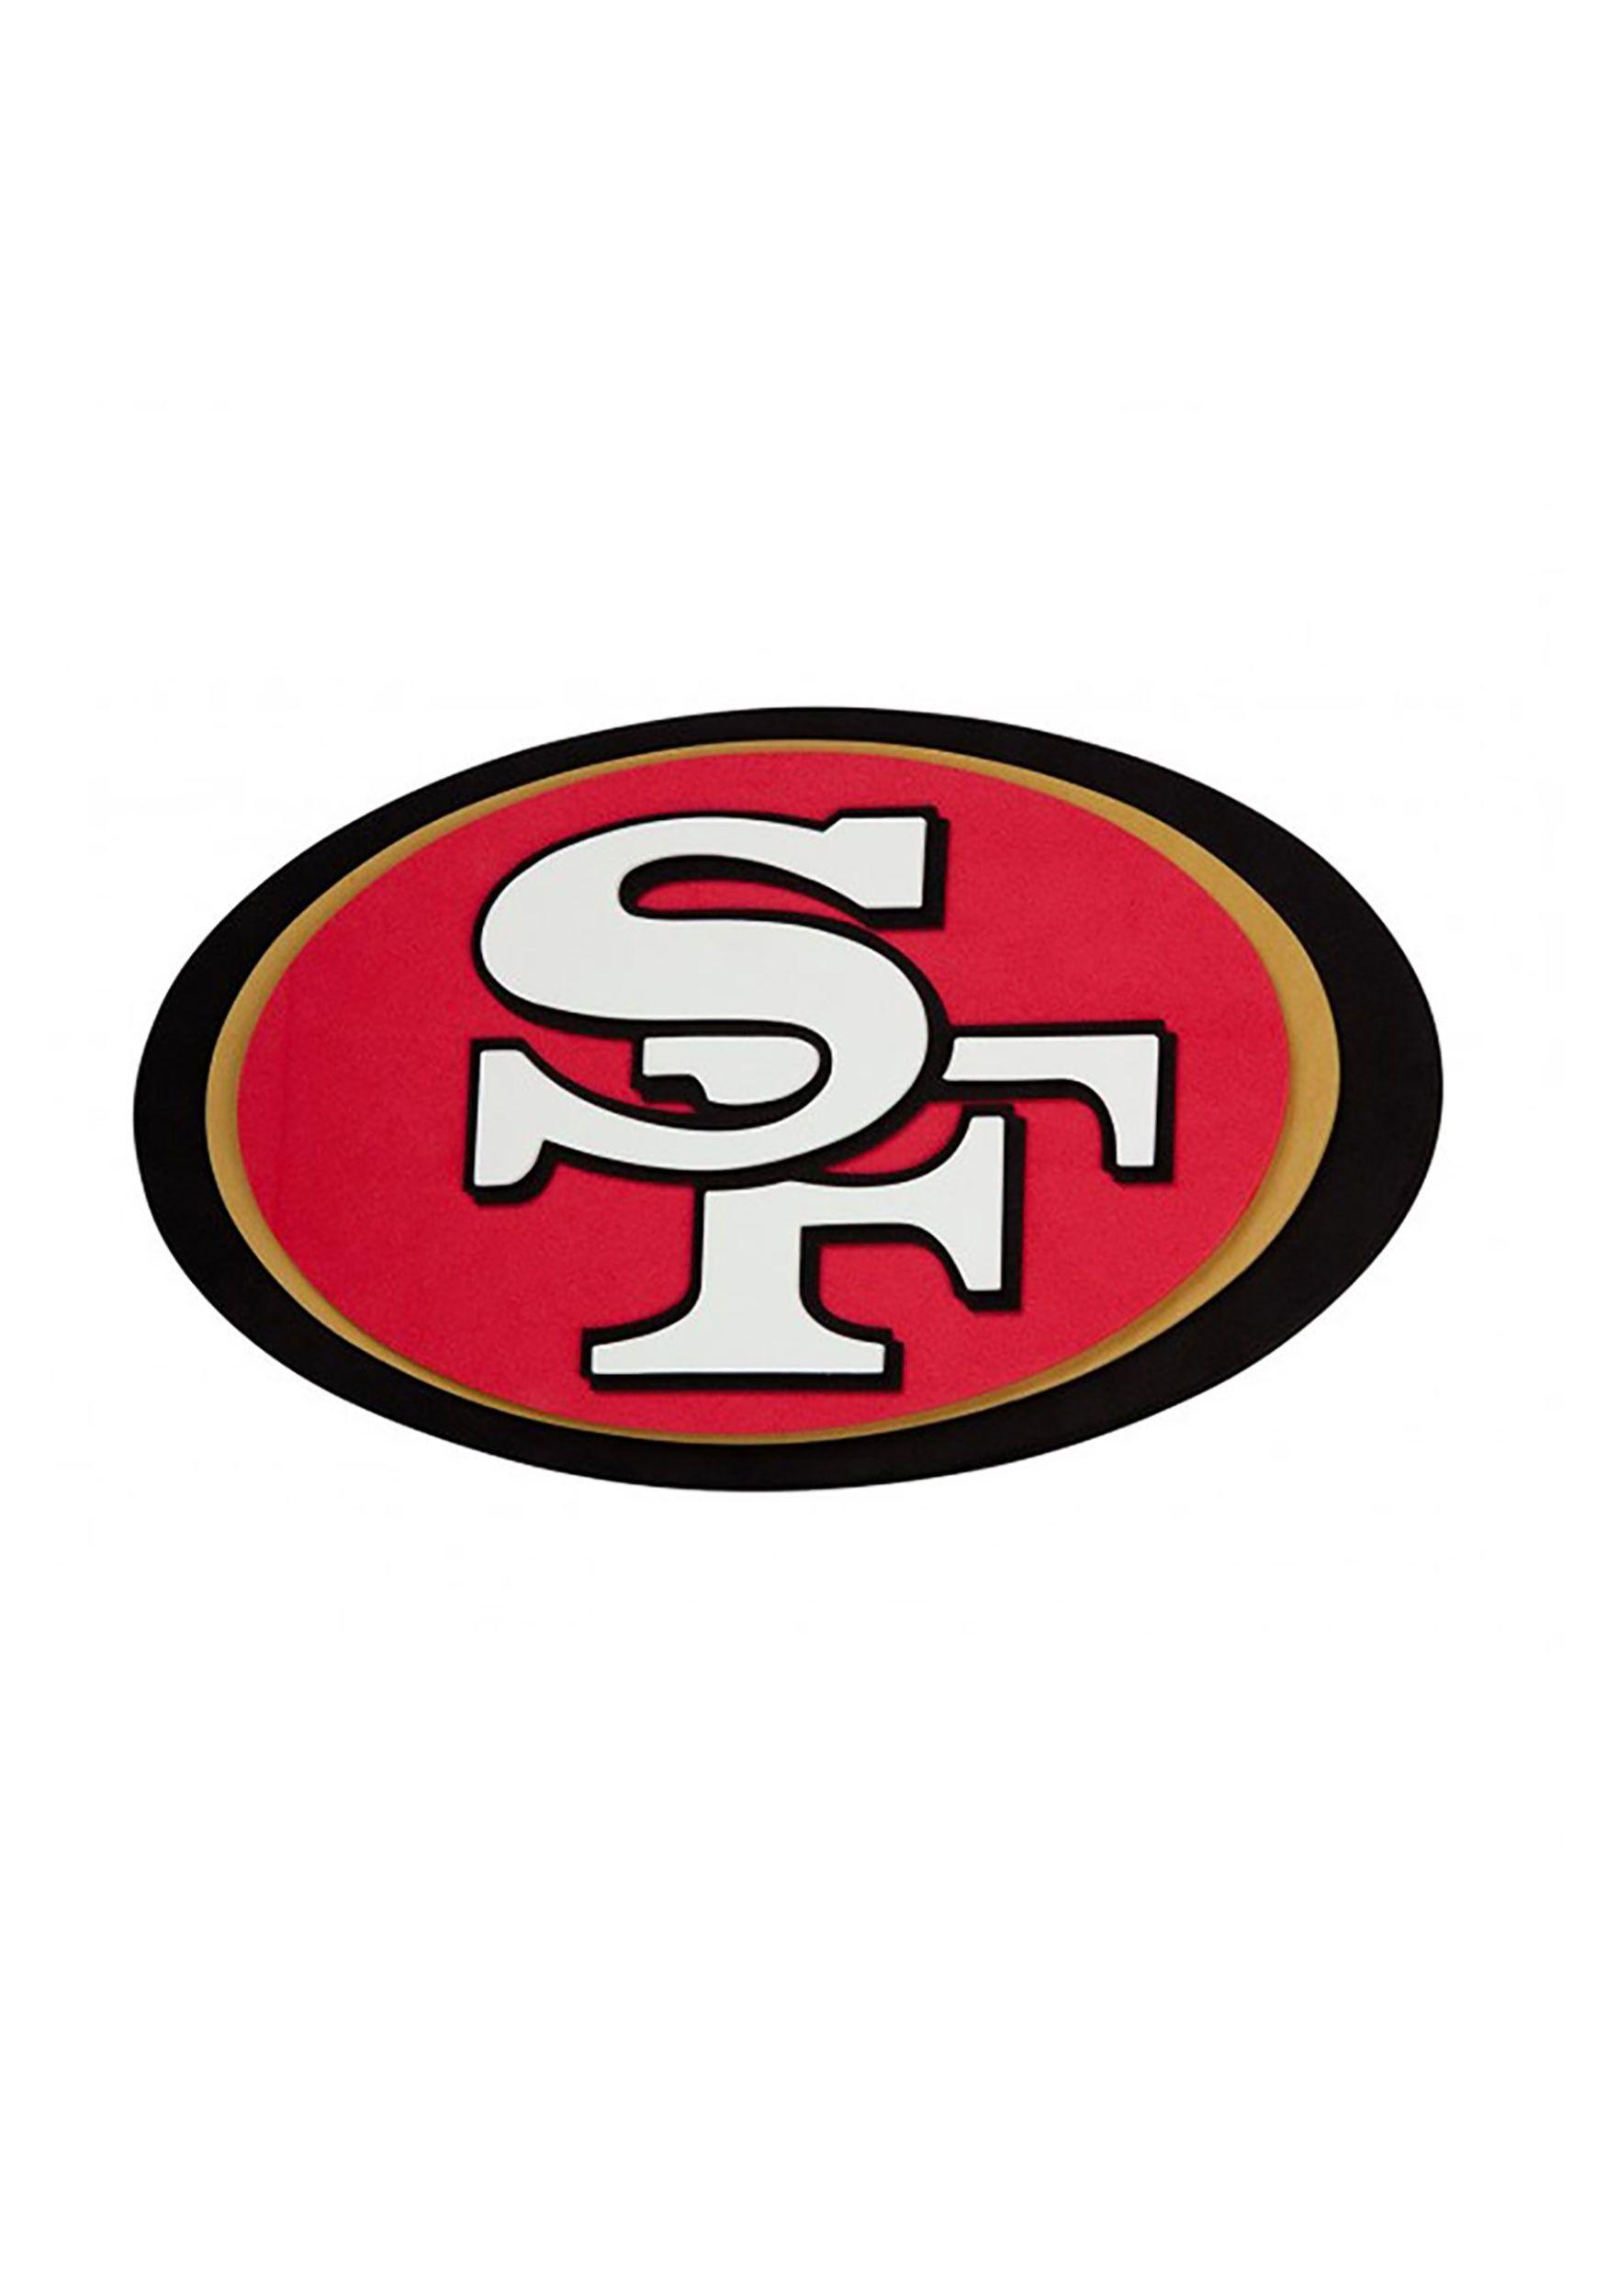 NFL 49ers Logo - San Francisco 49ers NFL Logo Foam Sign